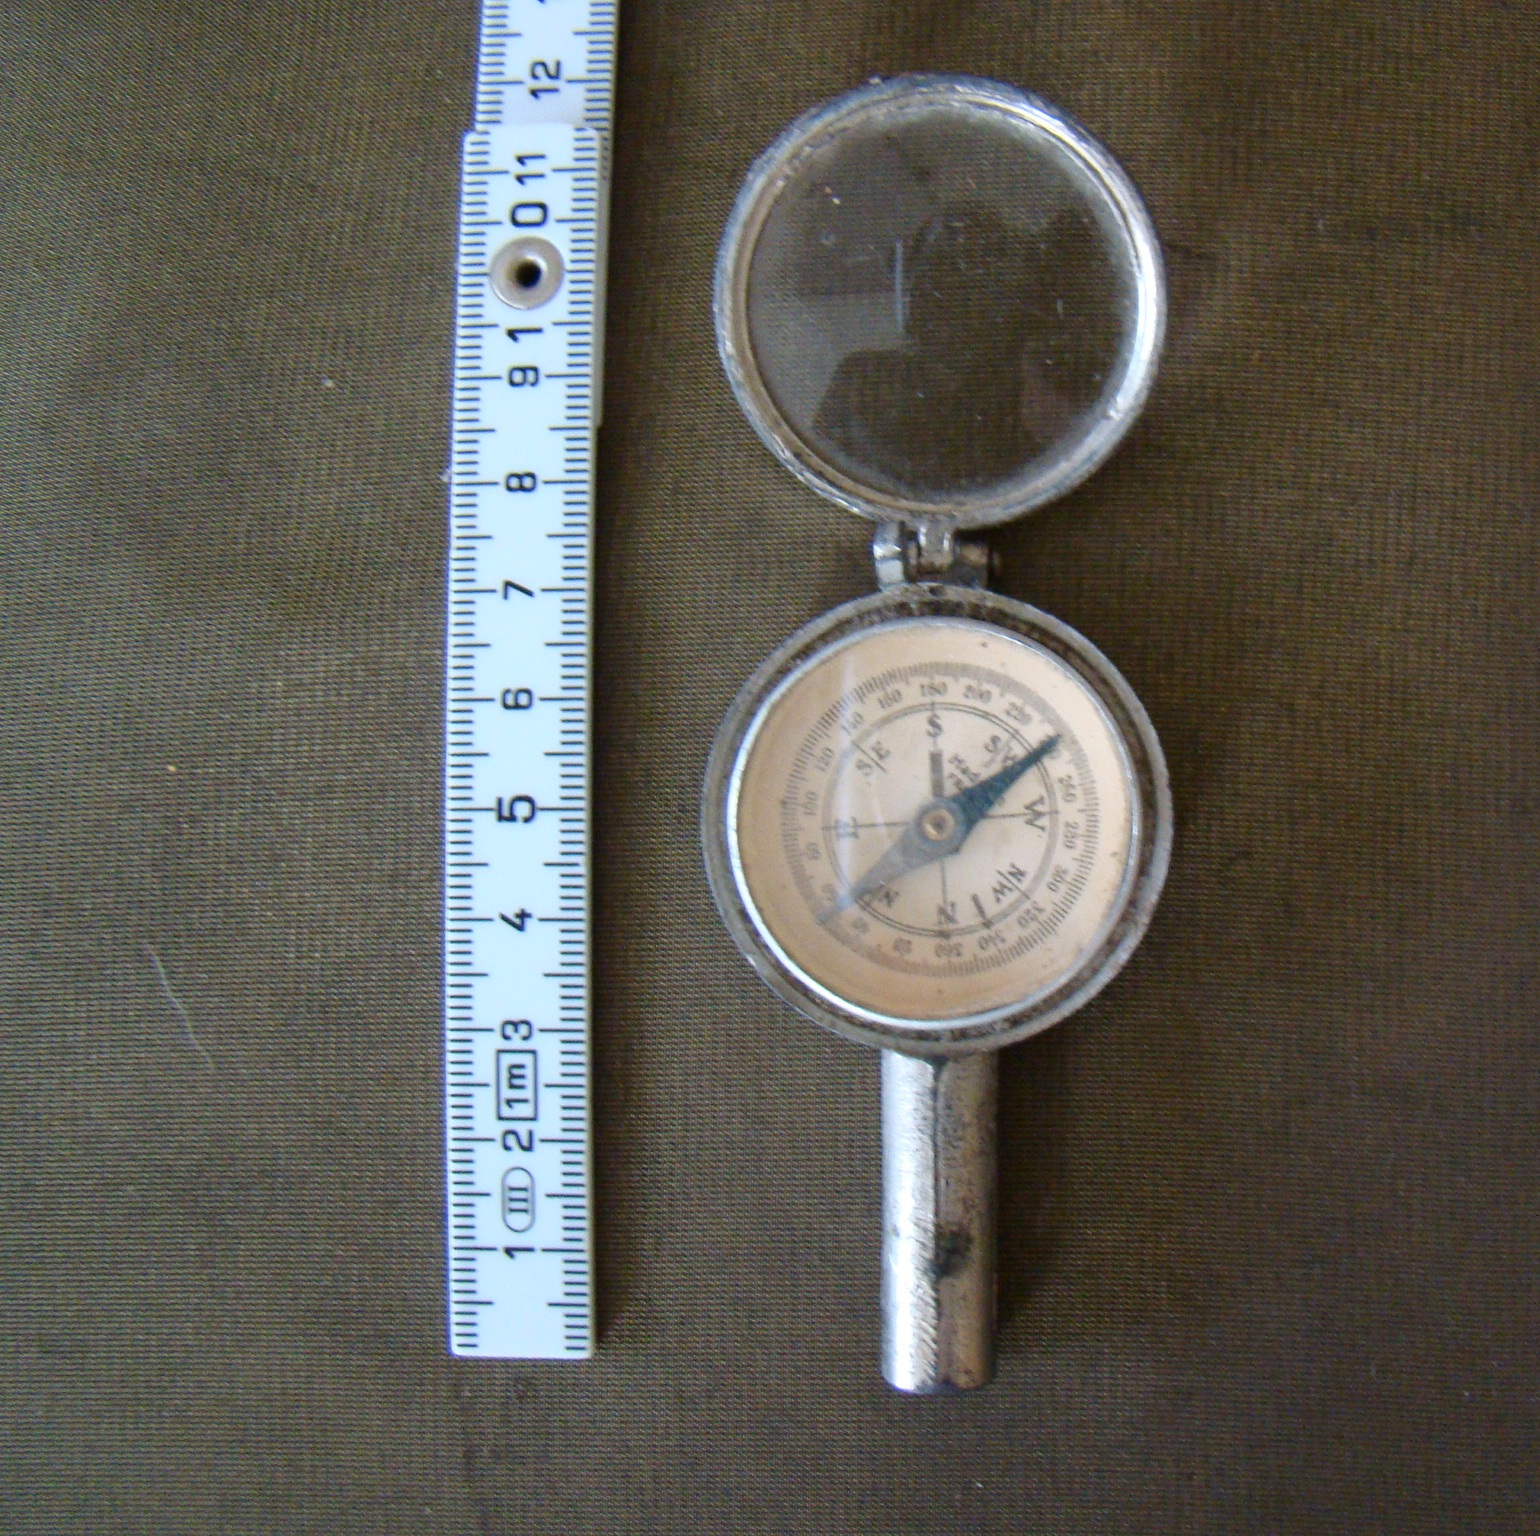 oud kompasje met spiegeltje als knop op wandelstok - bestel bij mittens.nl